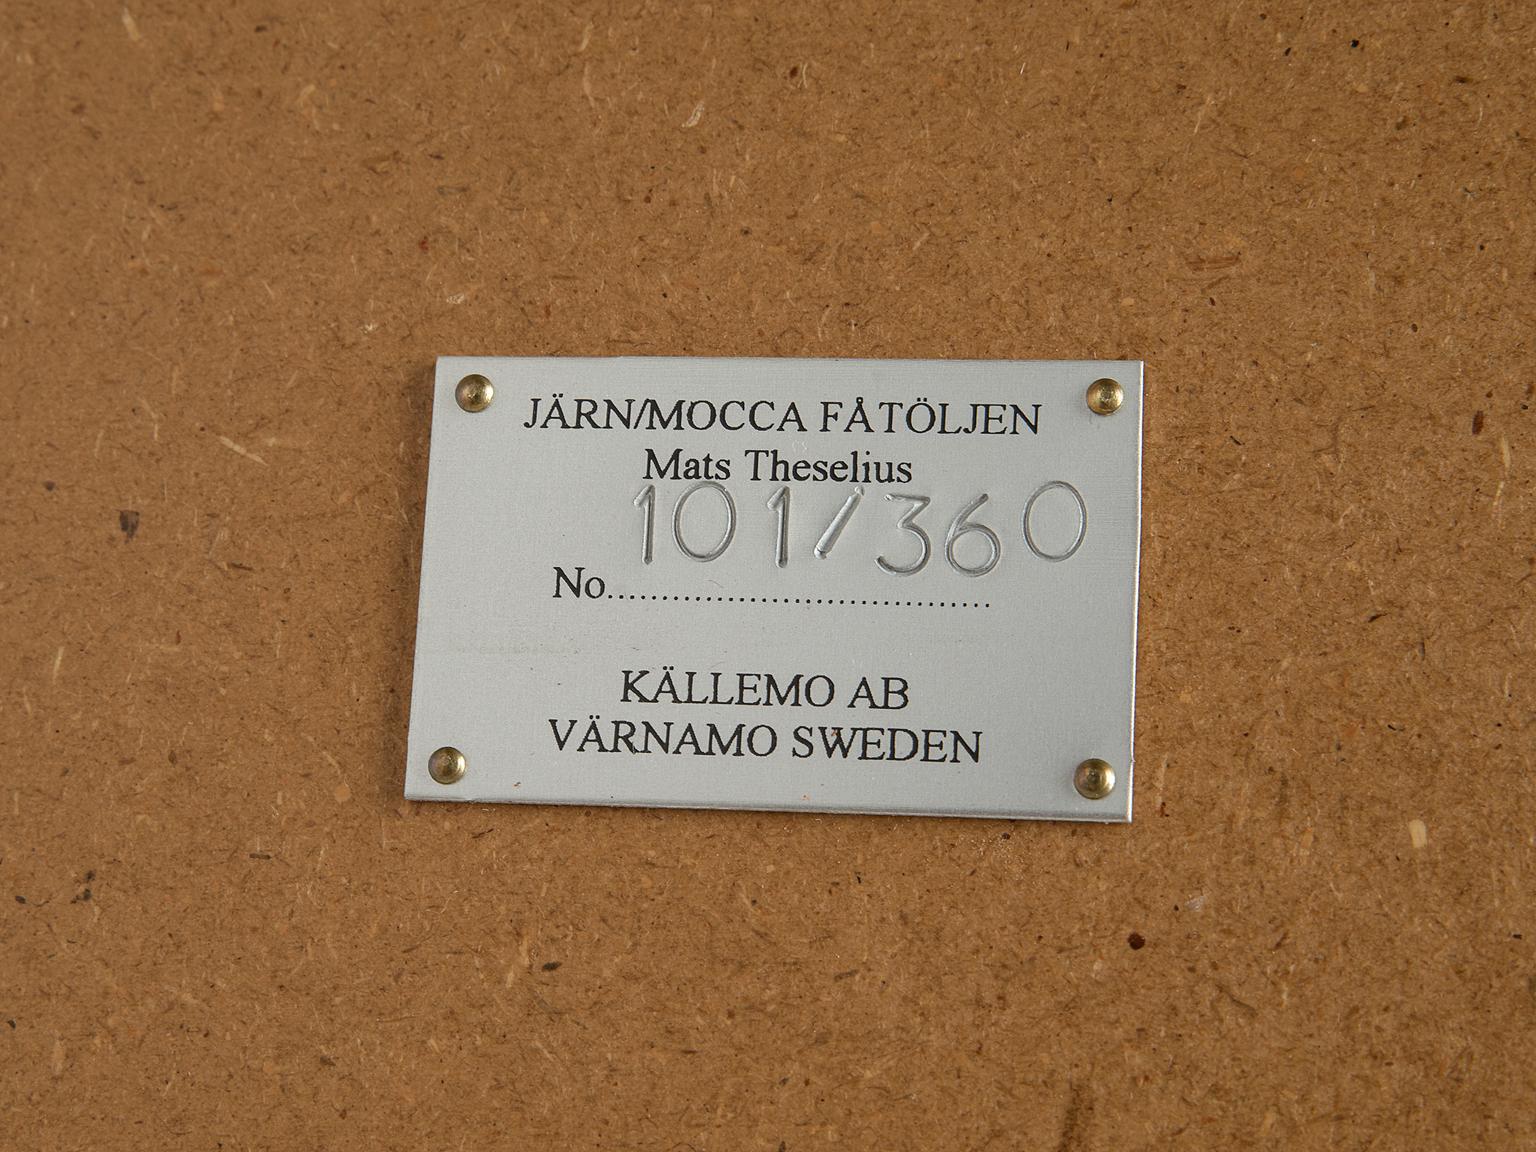 Mats Theselius for Källemo 'Järn/Mocca' Fätöljen Easy Chair 101/360 2